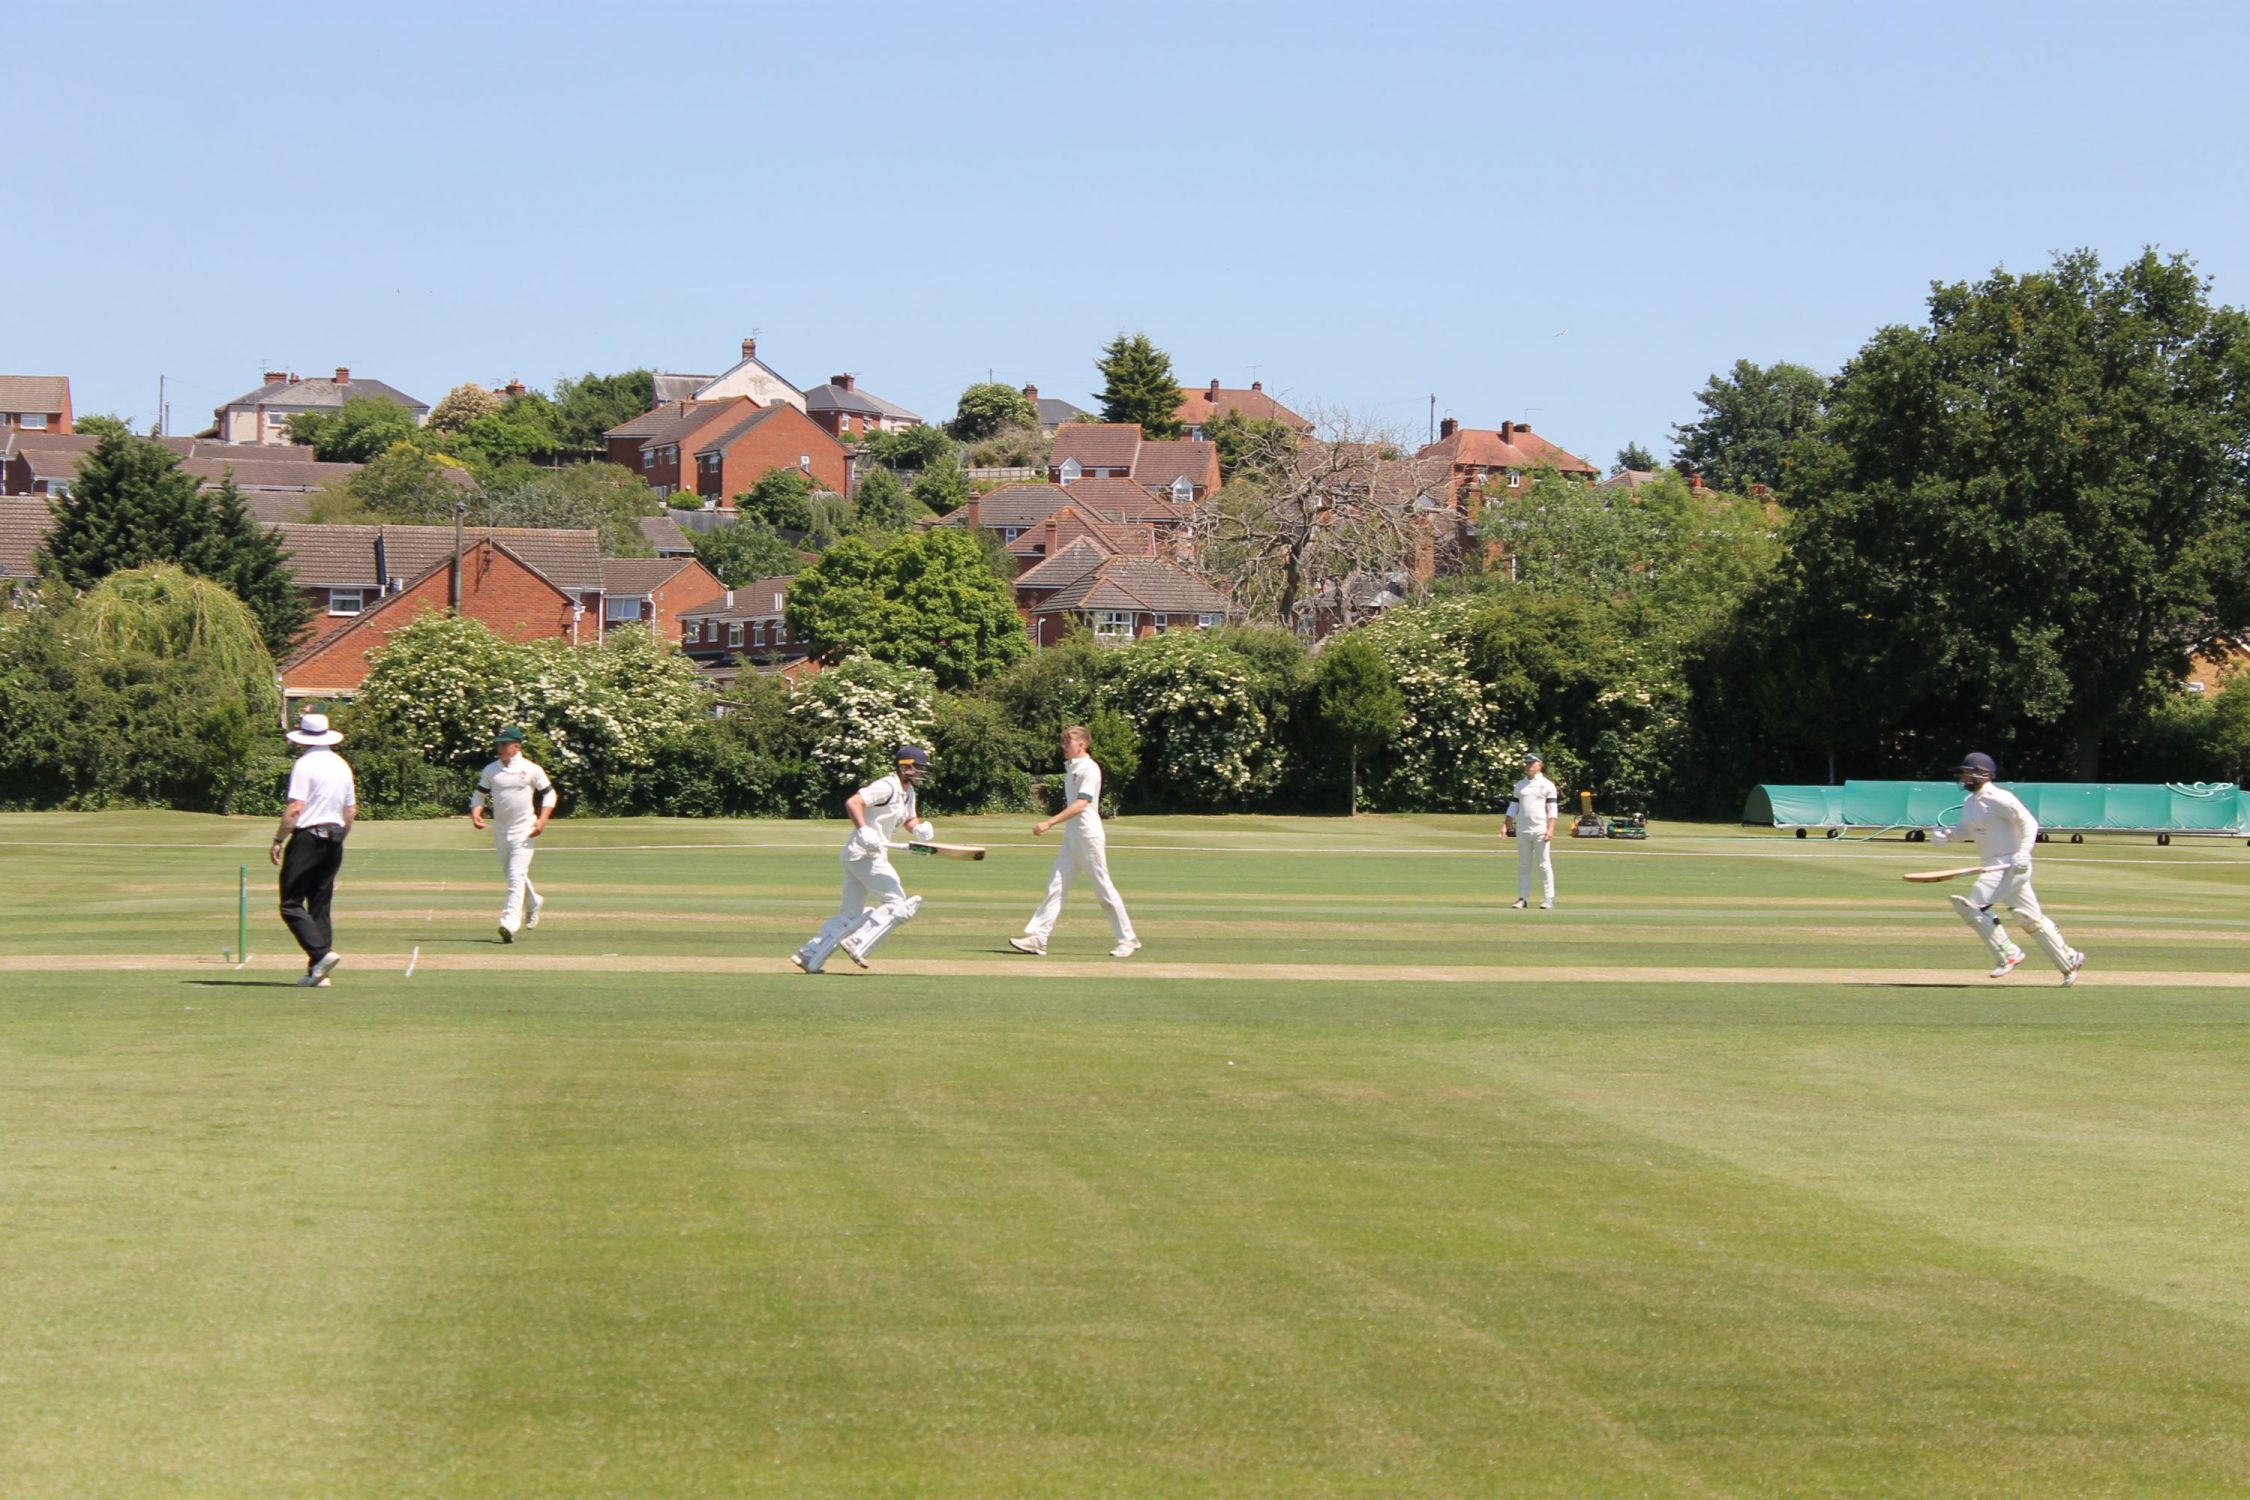 Cricket in the sunshine